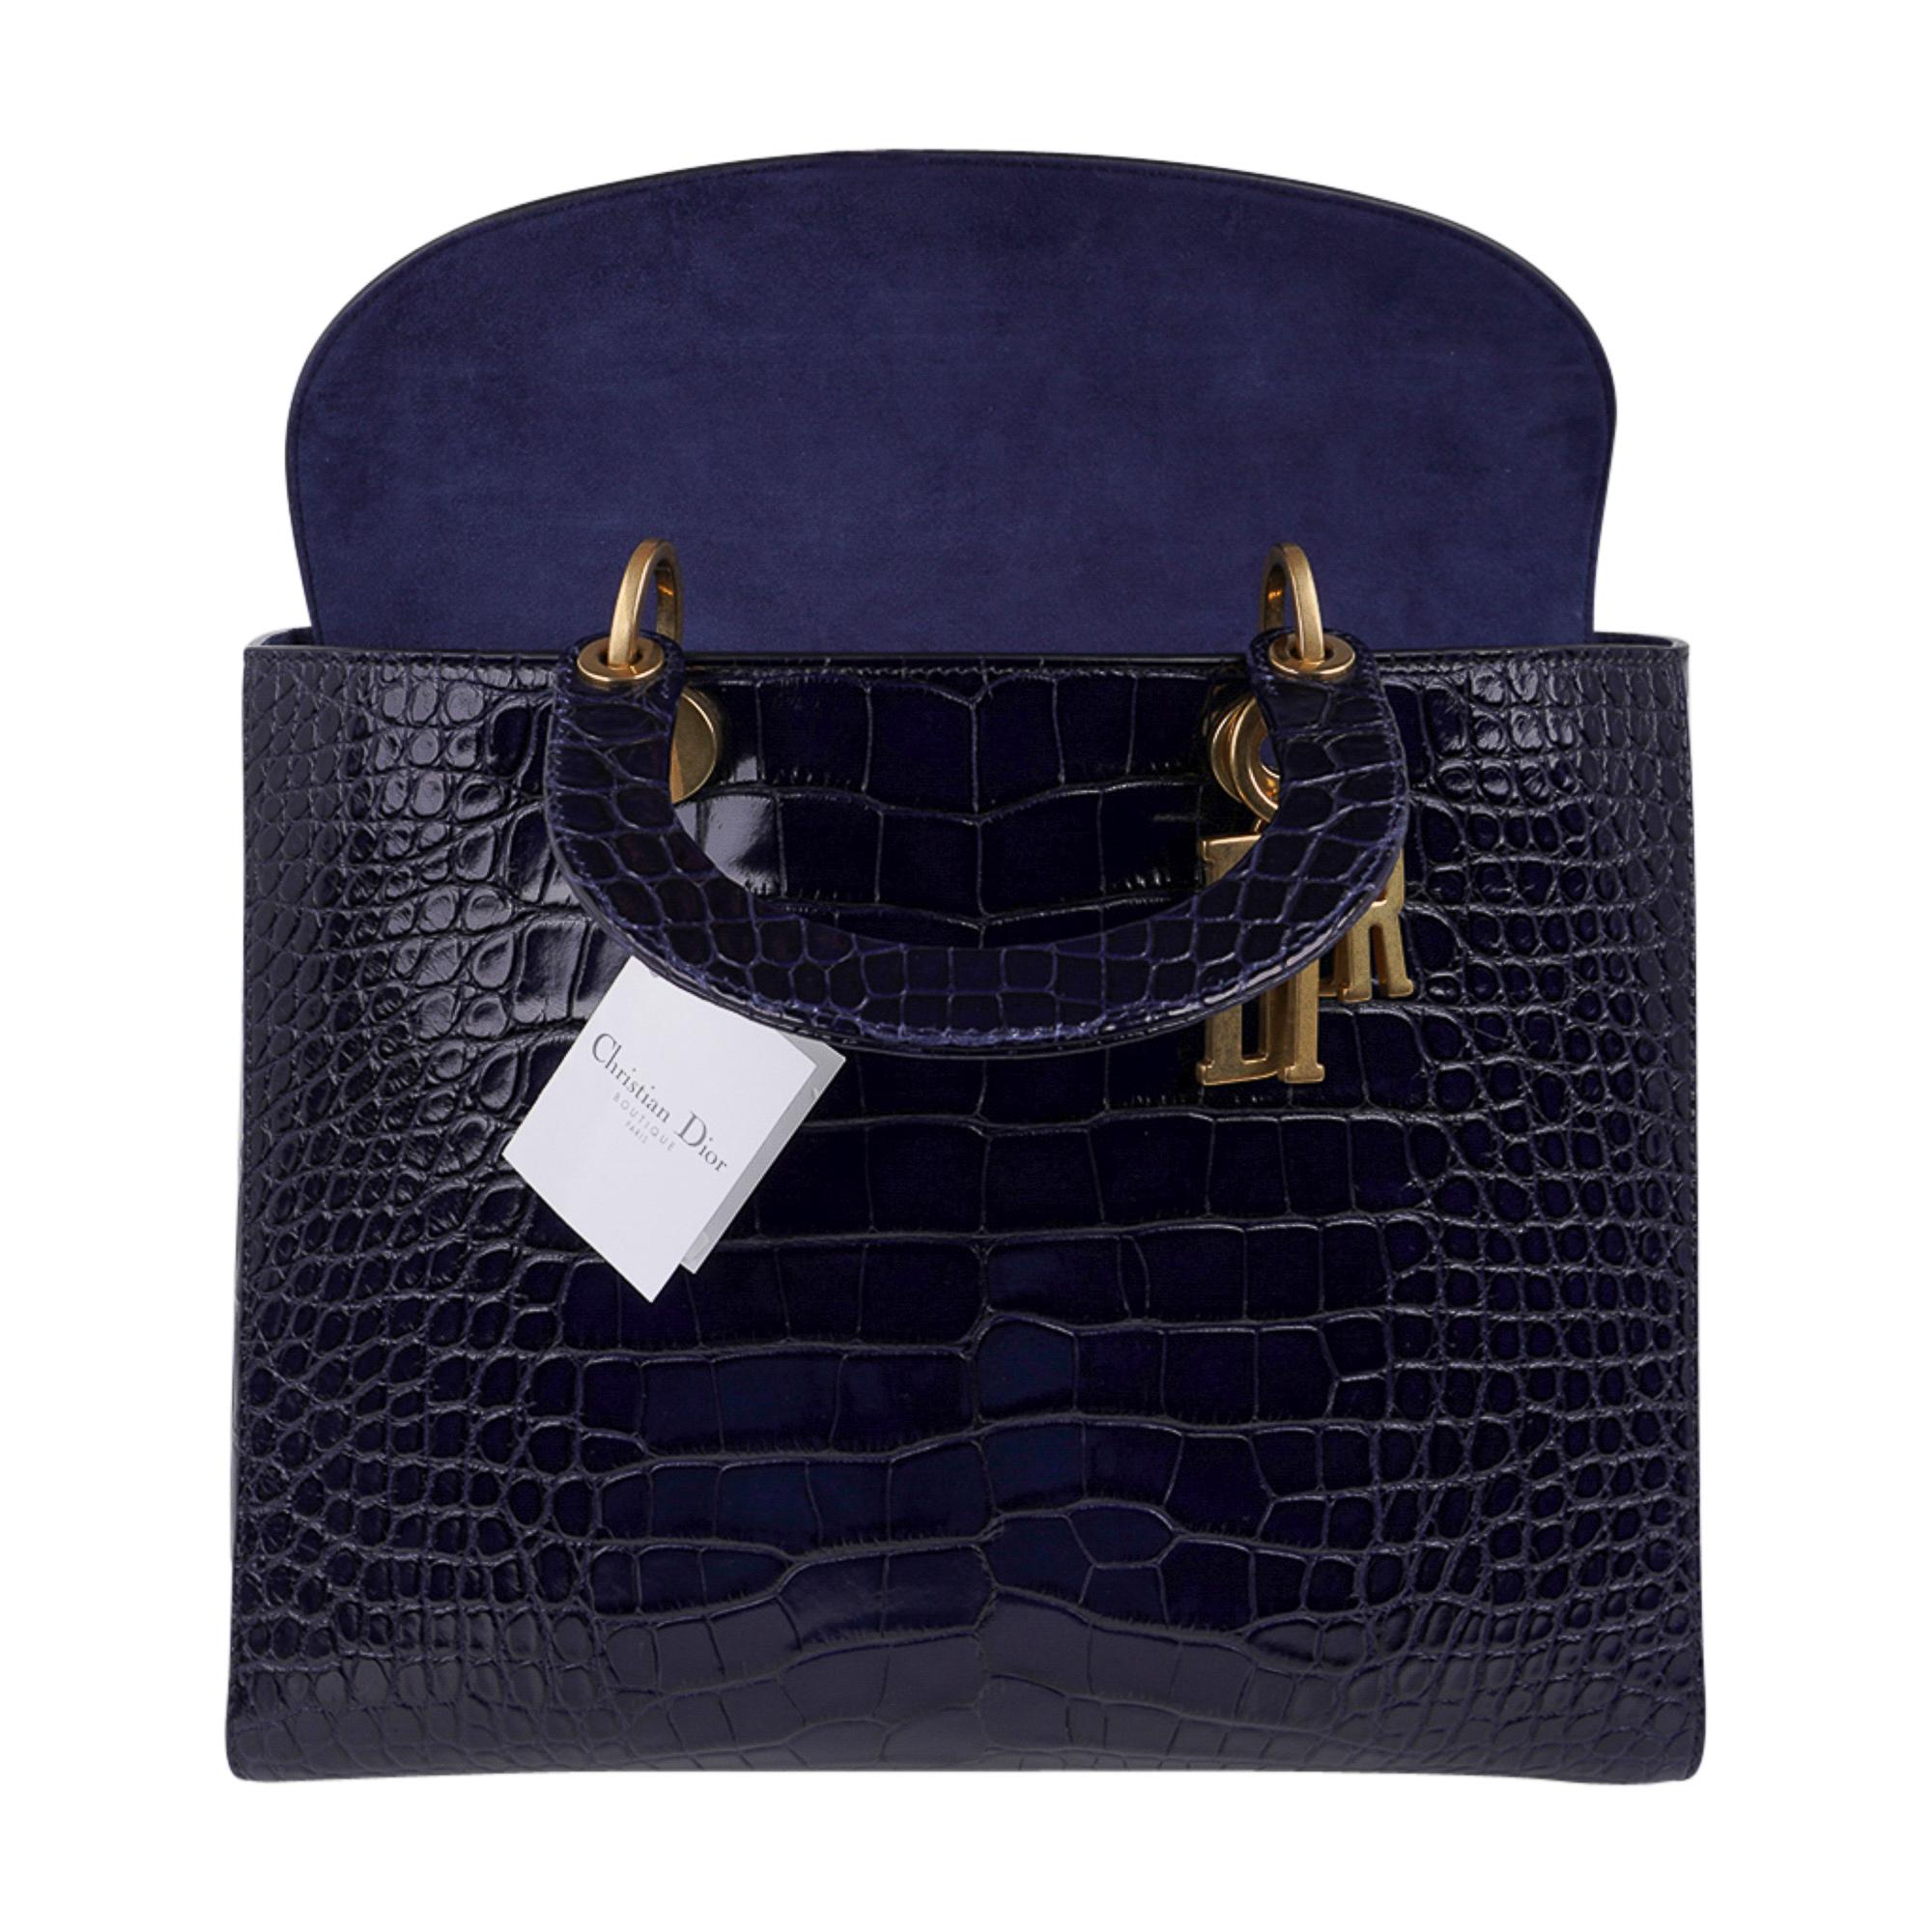 Christian Dior Bag Lady Dior Large Navy Matte Navy Alligator New w/Tag For Sale 1